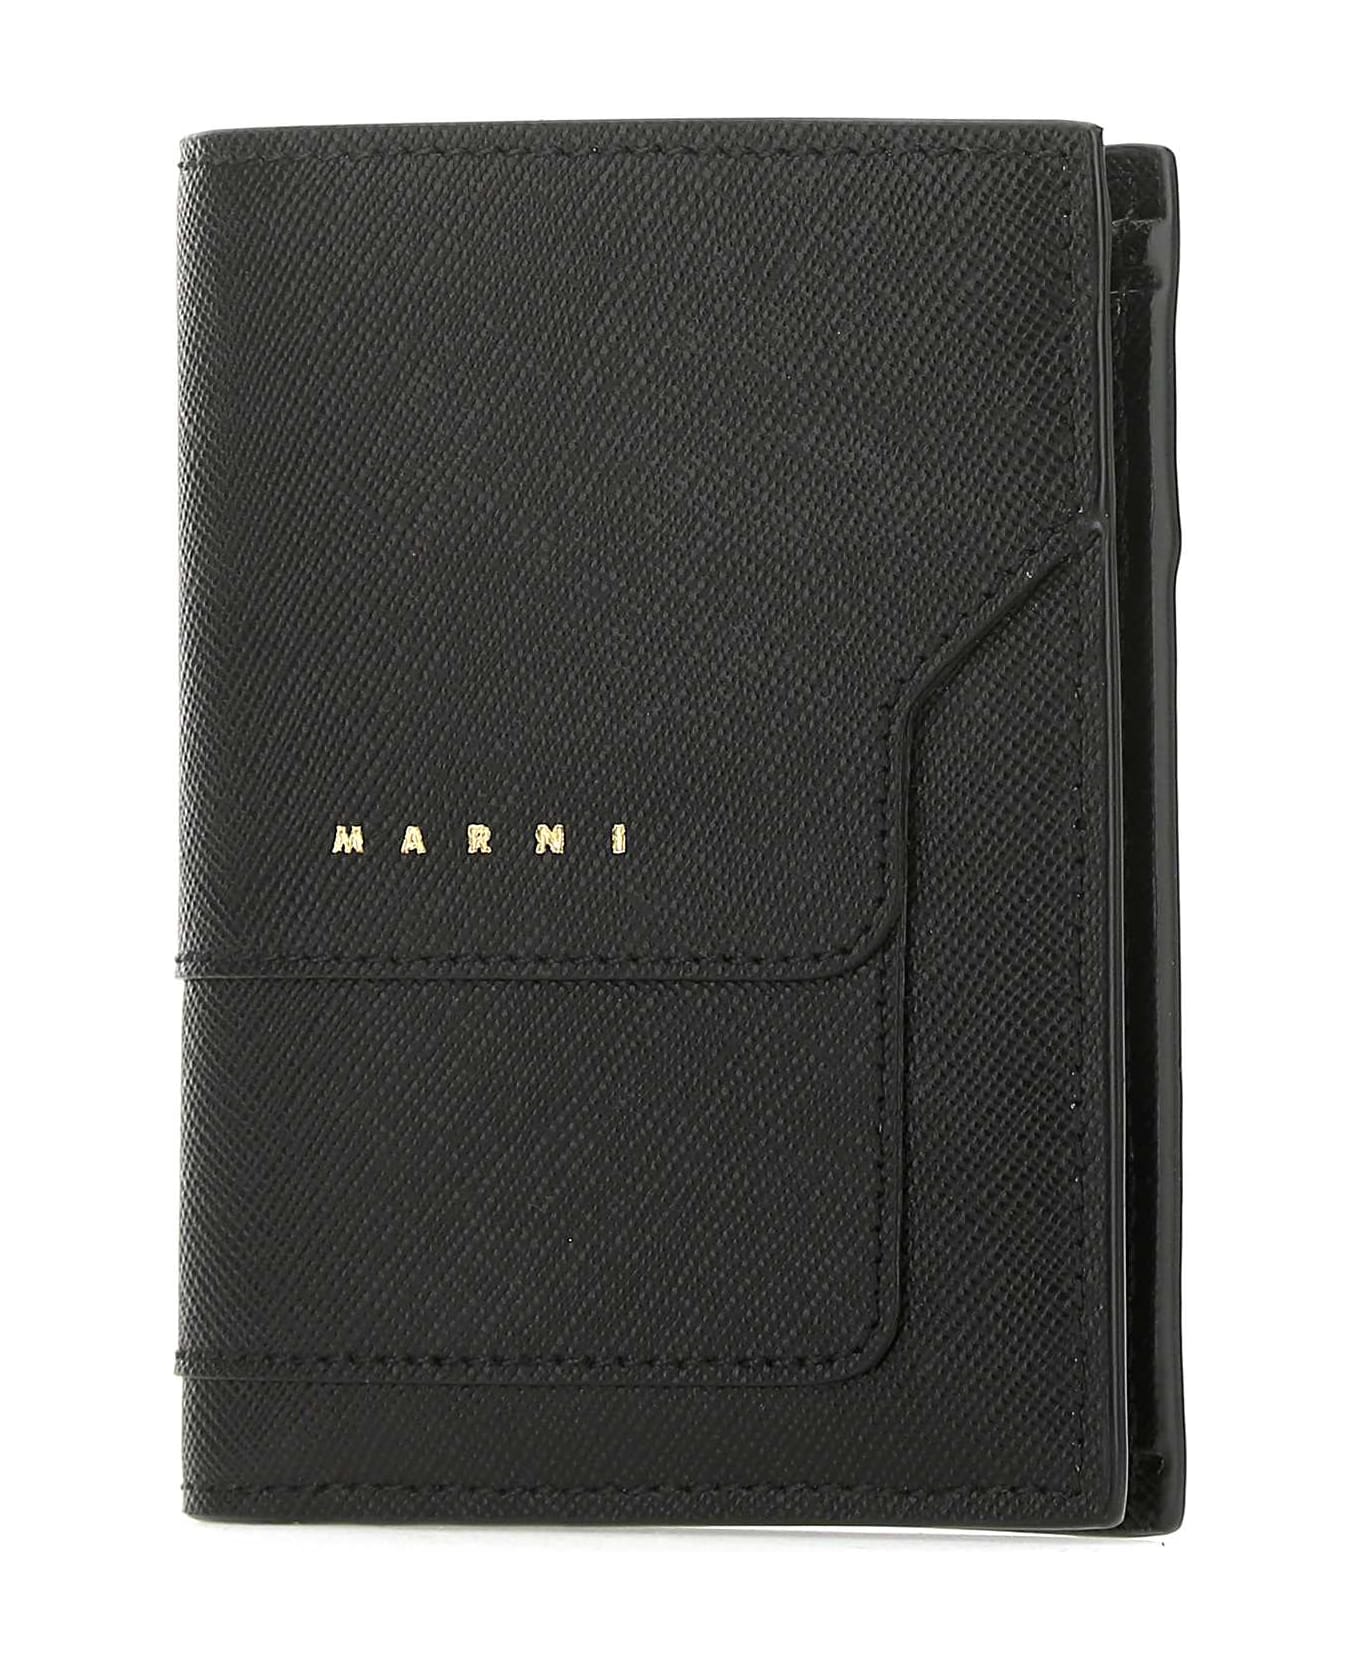 Marni Black Leather Wallet - Z360N